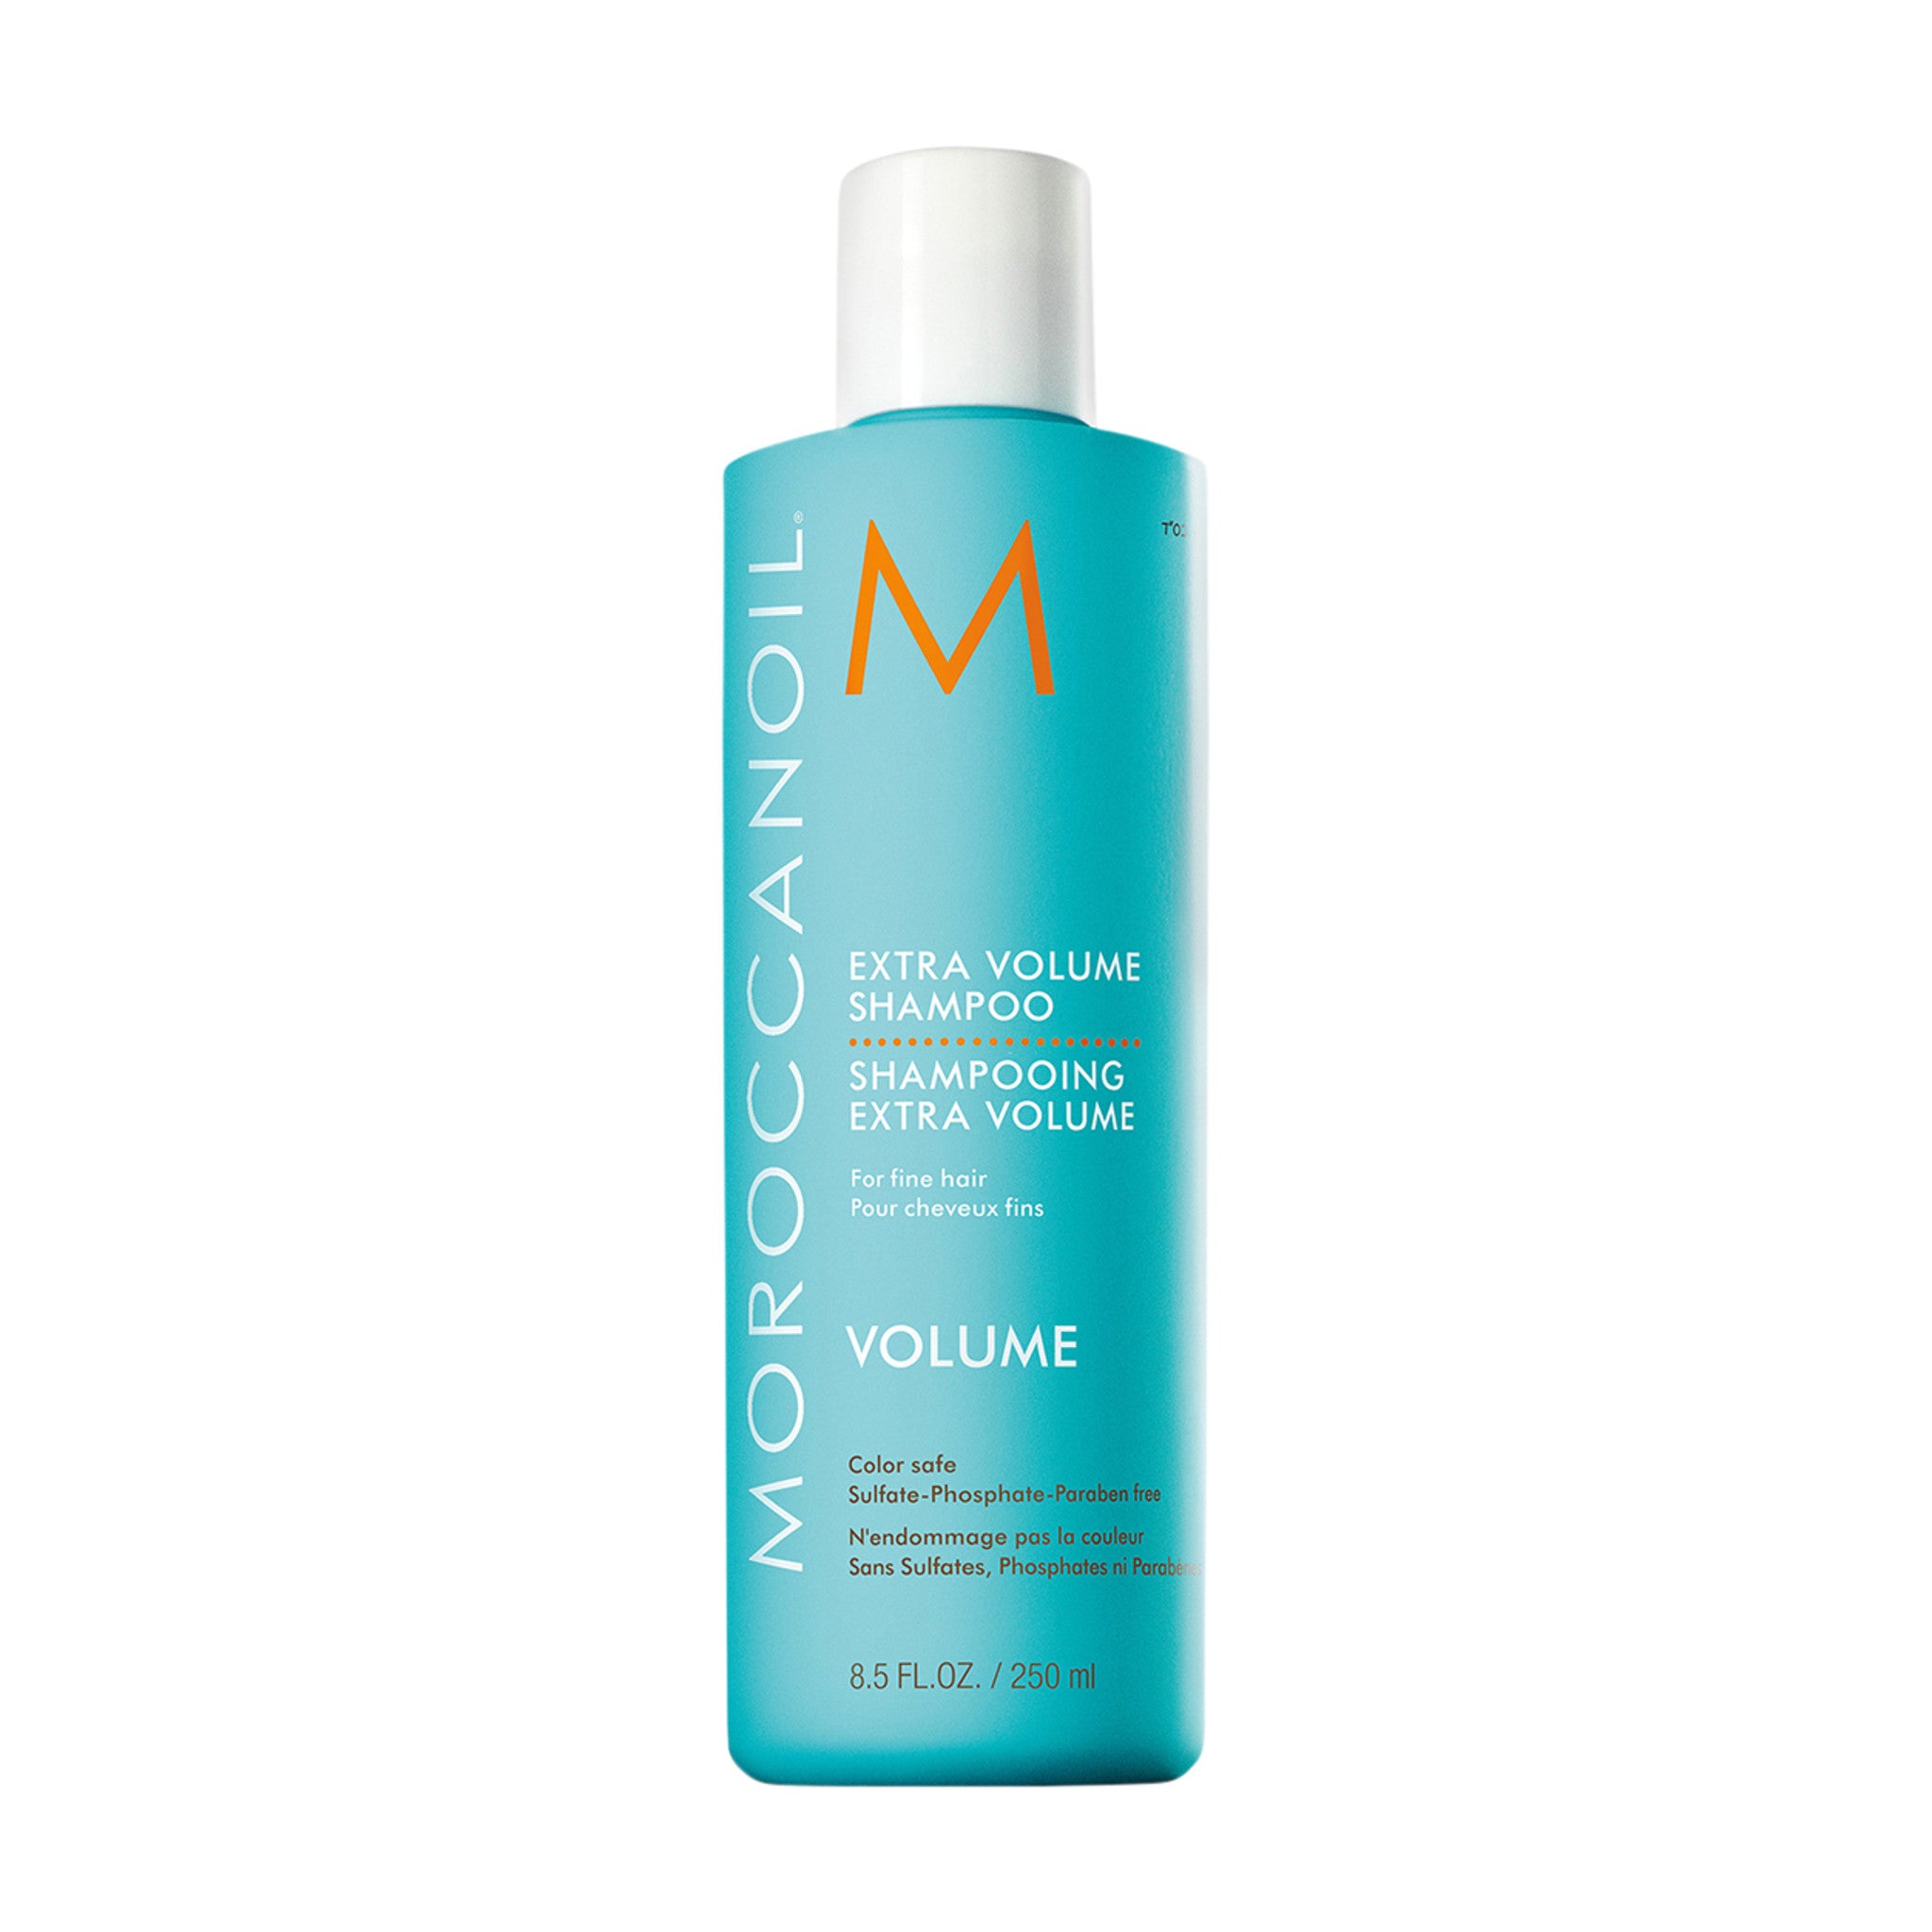 Moroccanoil Extra Volume Shampoo Size variant: 8.5 fl oz | 250 ml main image.